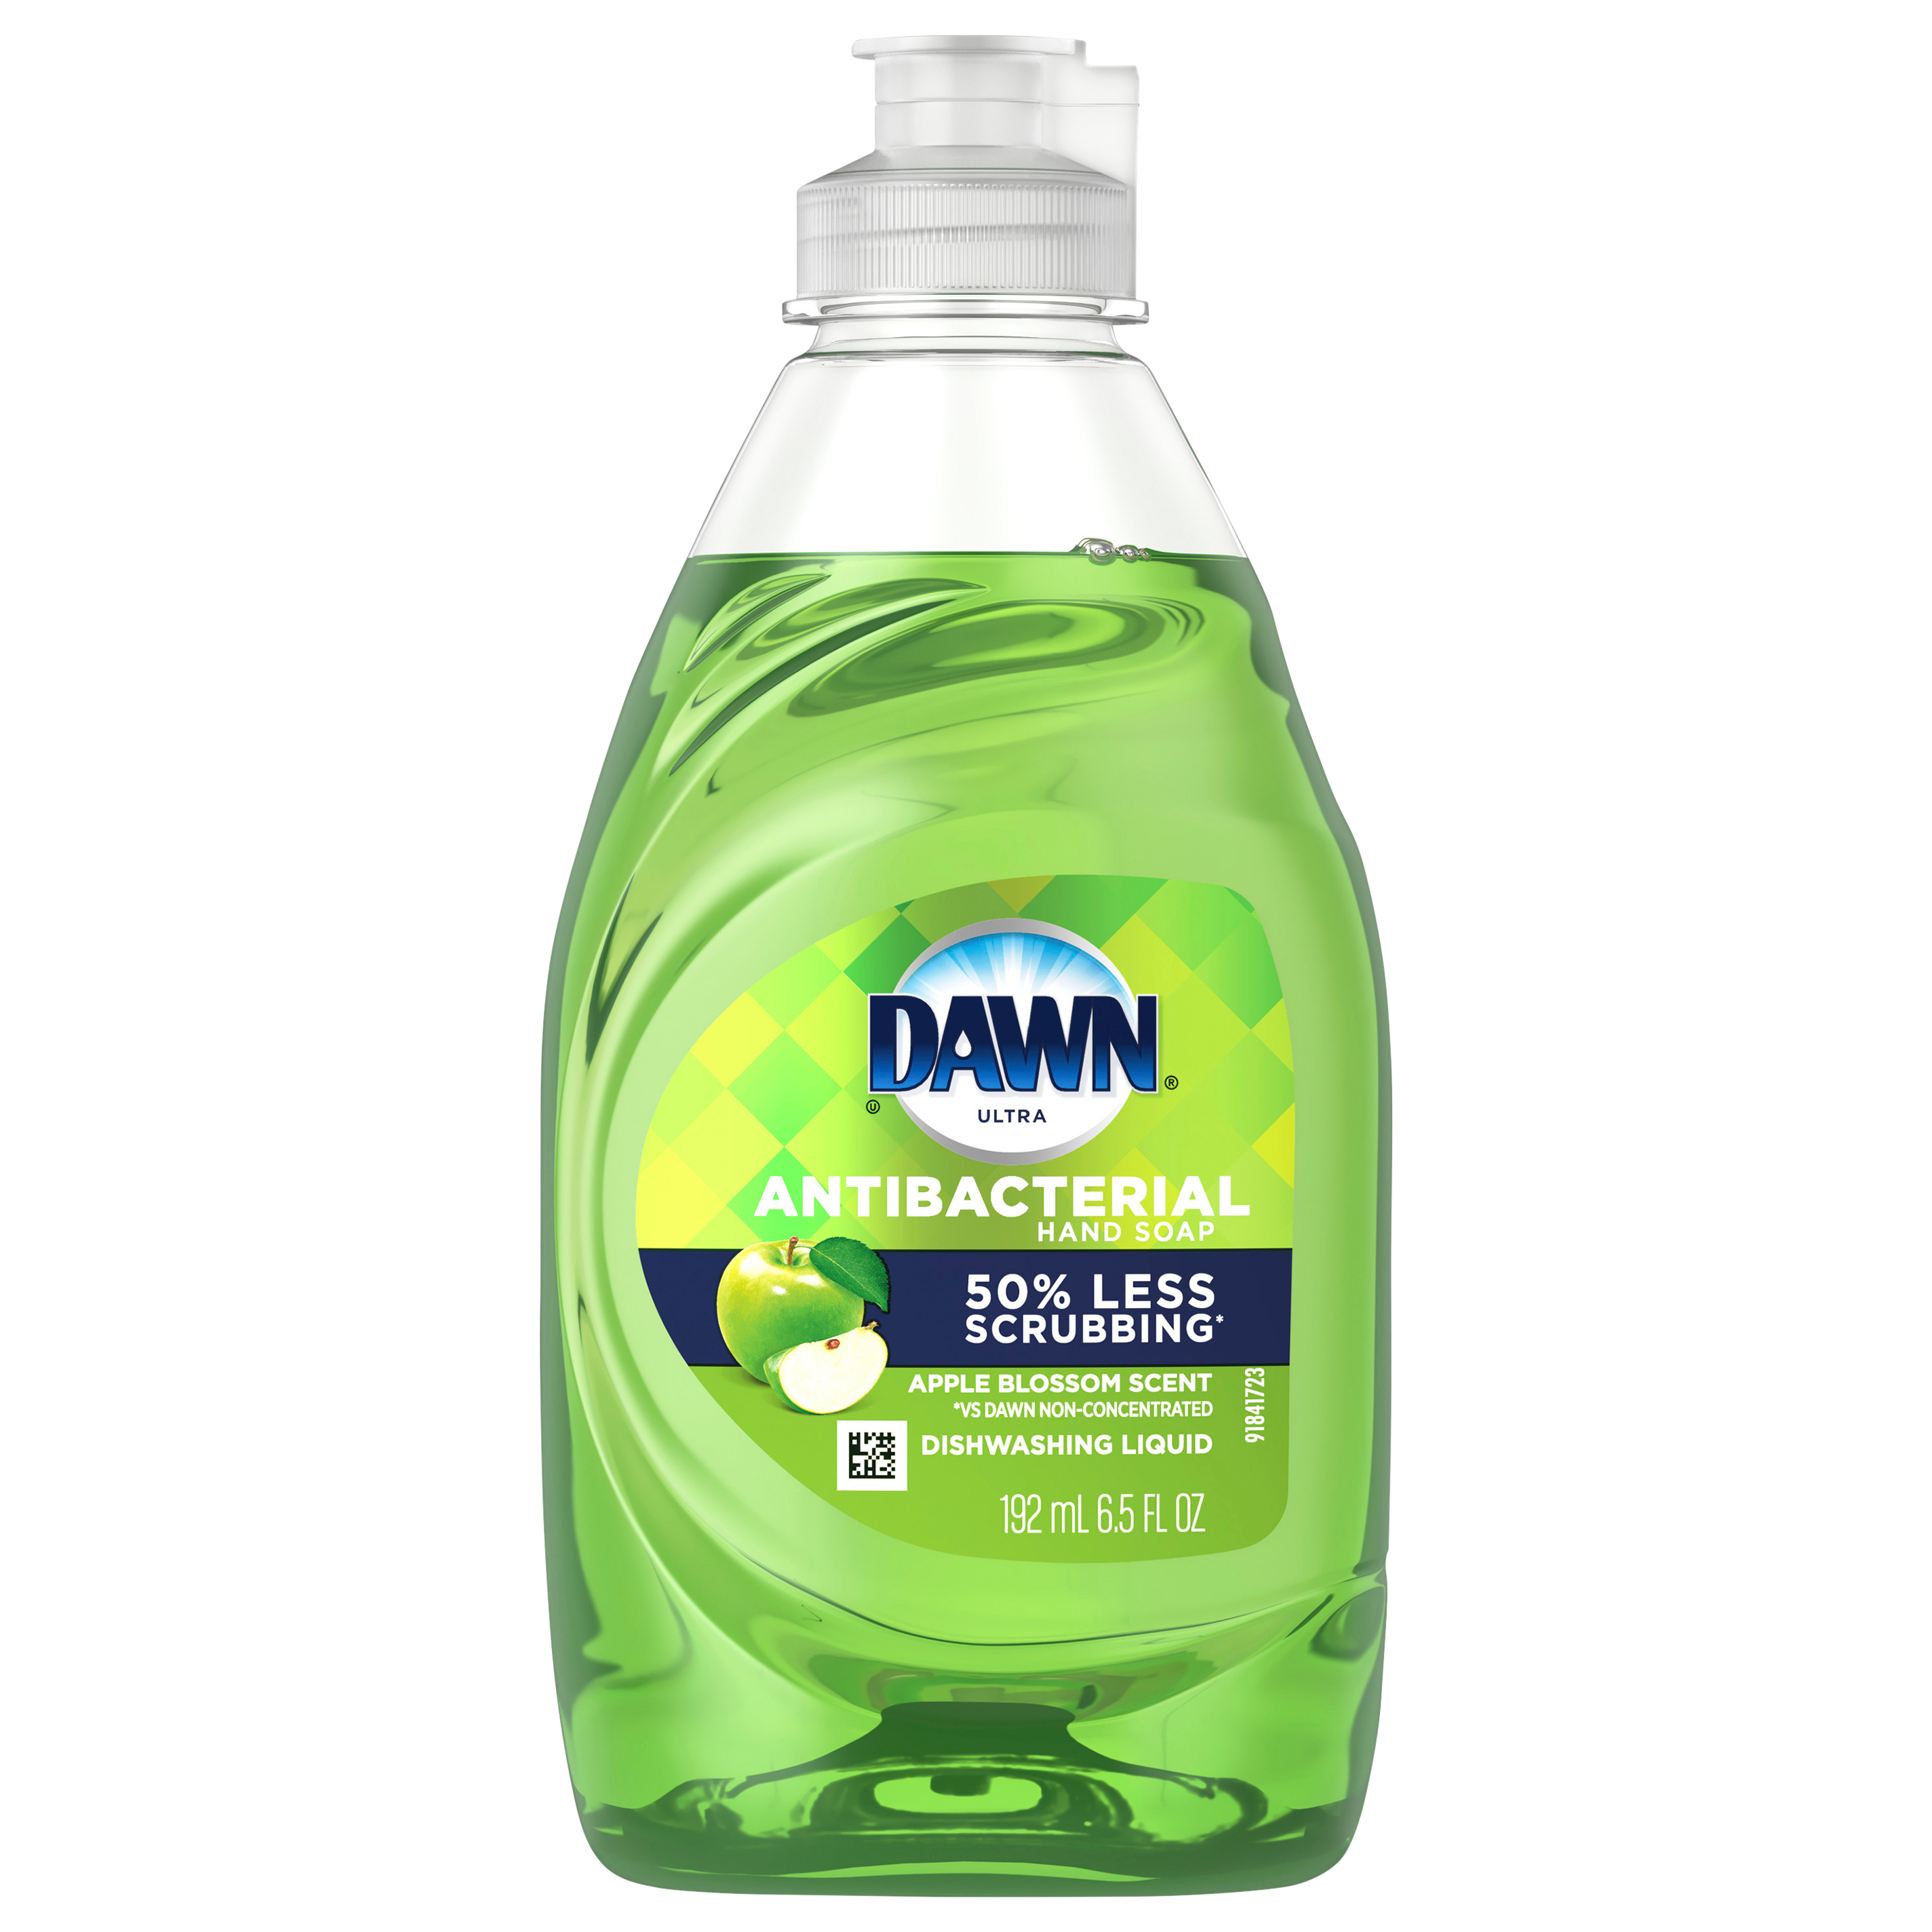 Dawn Ultra Antibacterial Dishwashing Liquid Dish Soap, Apple Blossom Scent, 6.5 fl oz